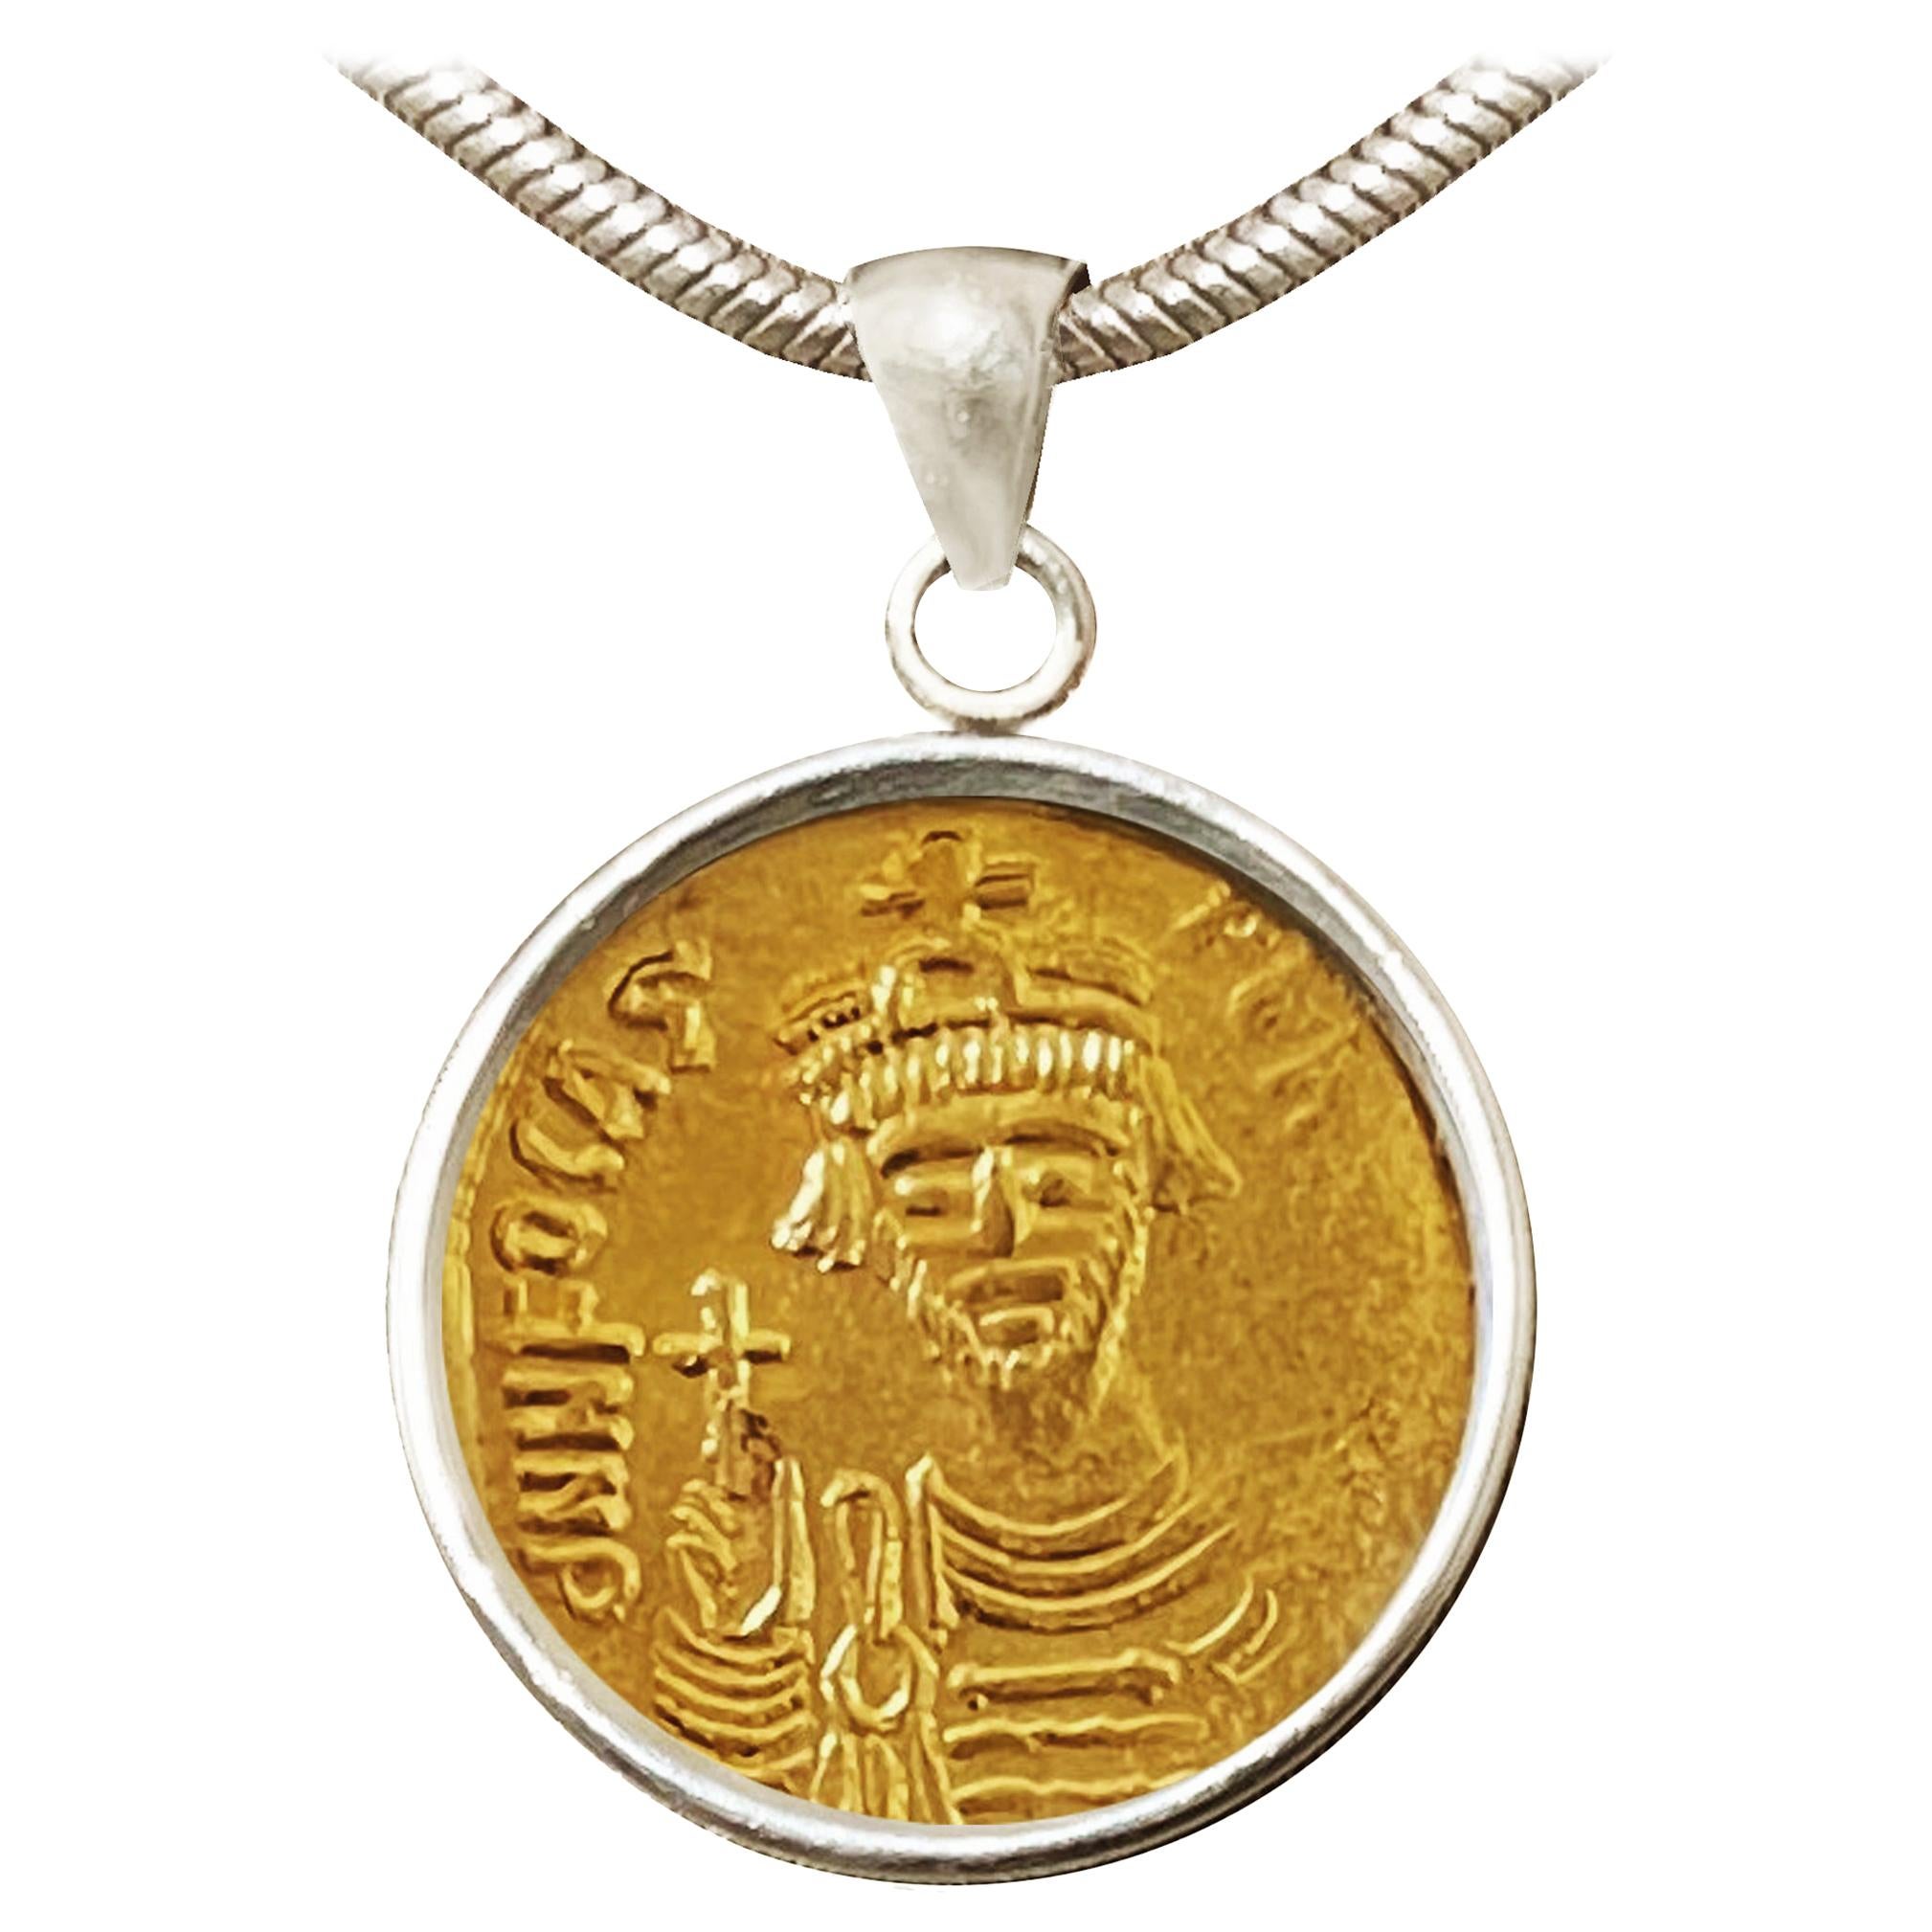 24 Karat Gold Byzantine Coin Pendant Depicting the Emperor Phocas Rear Victory